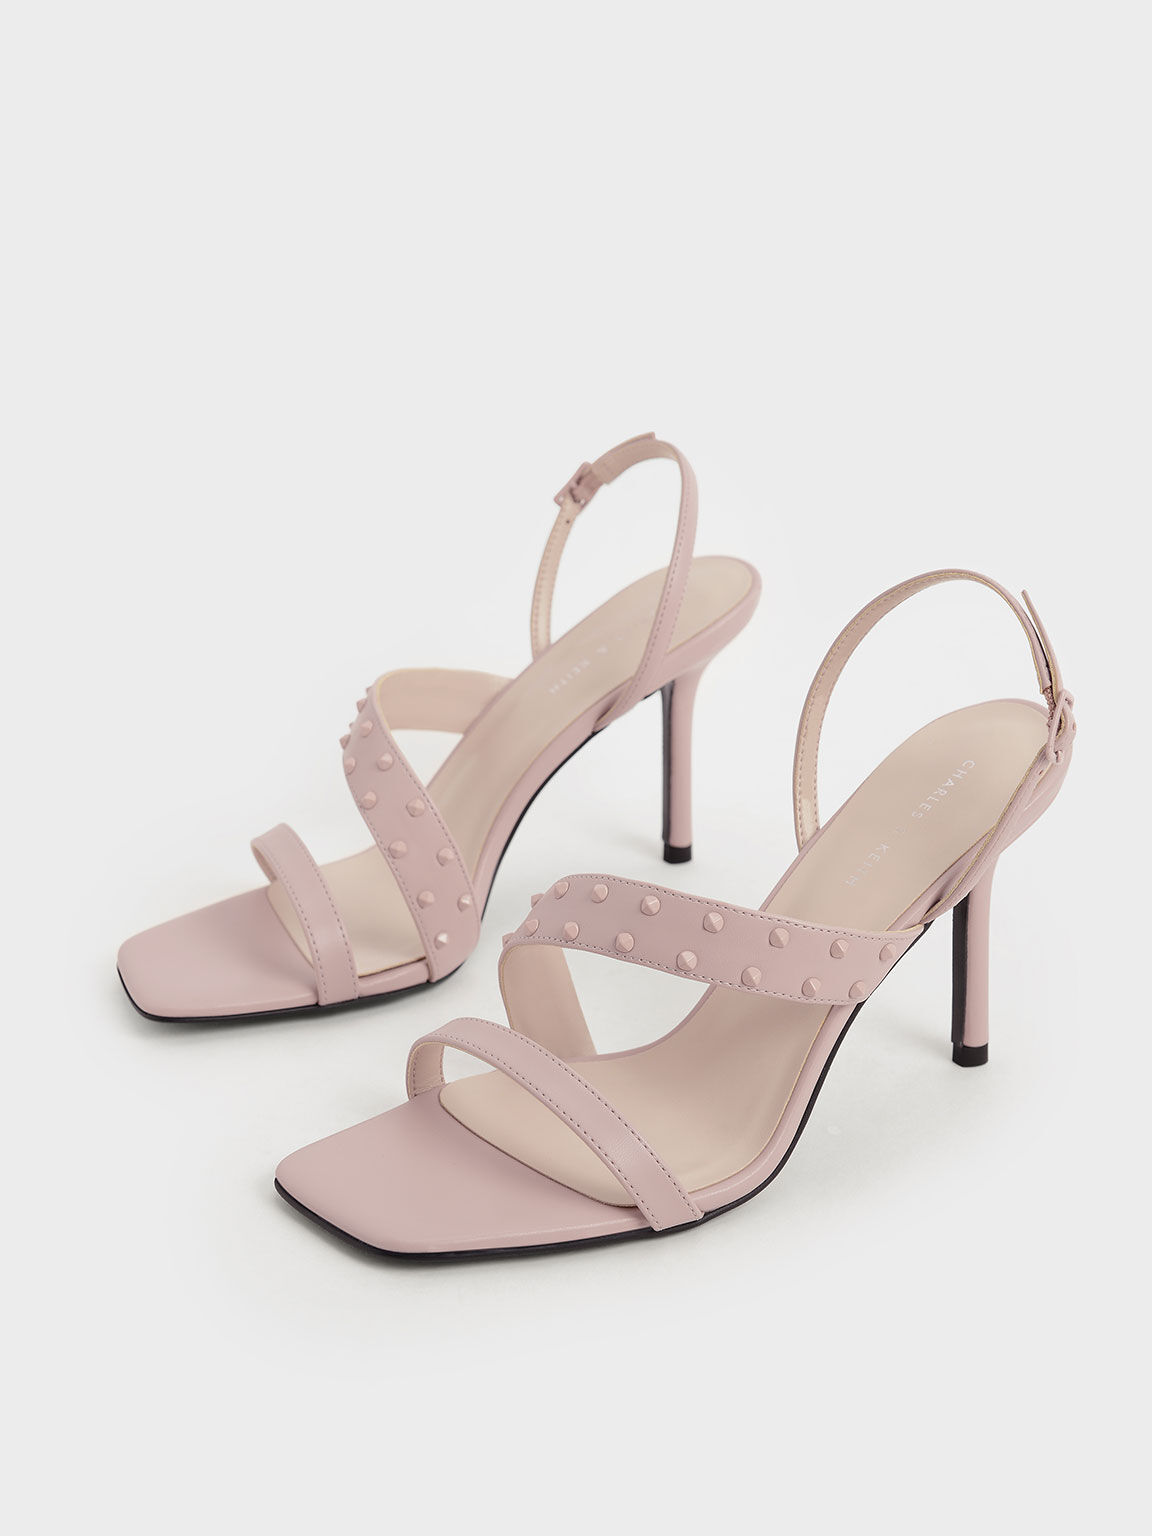 Studded Asymmetric Strap Stiletto Sandals, Light Pink, hi-res